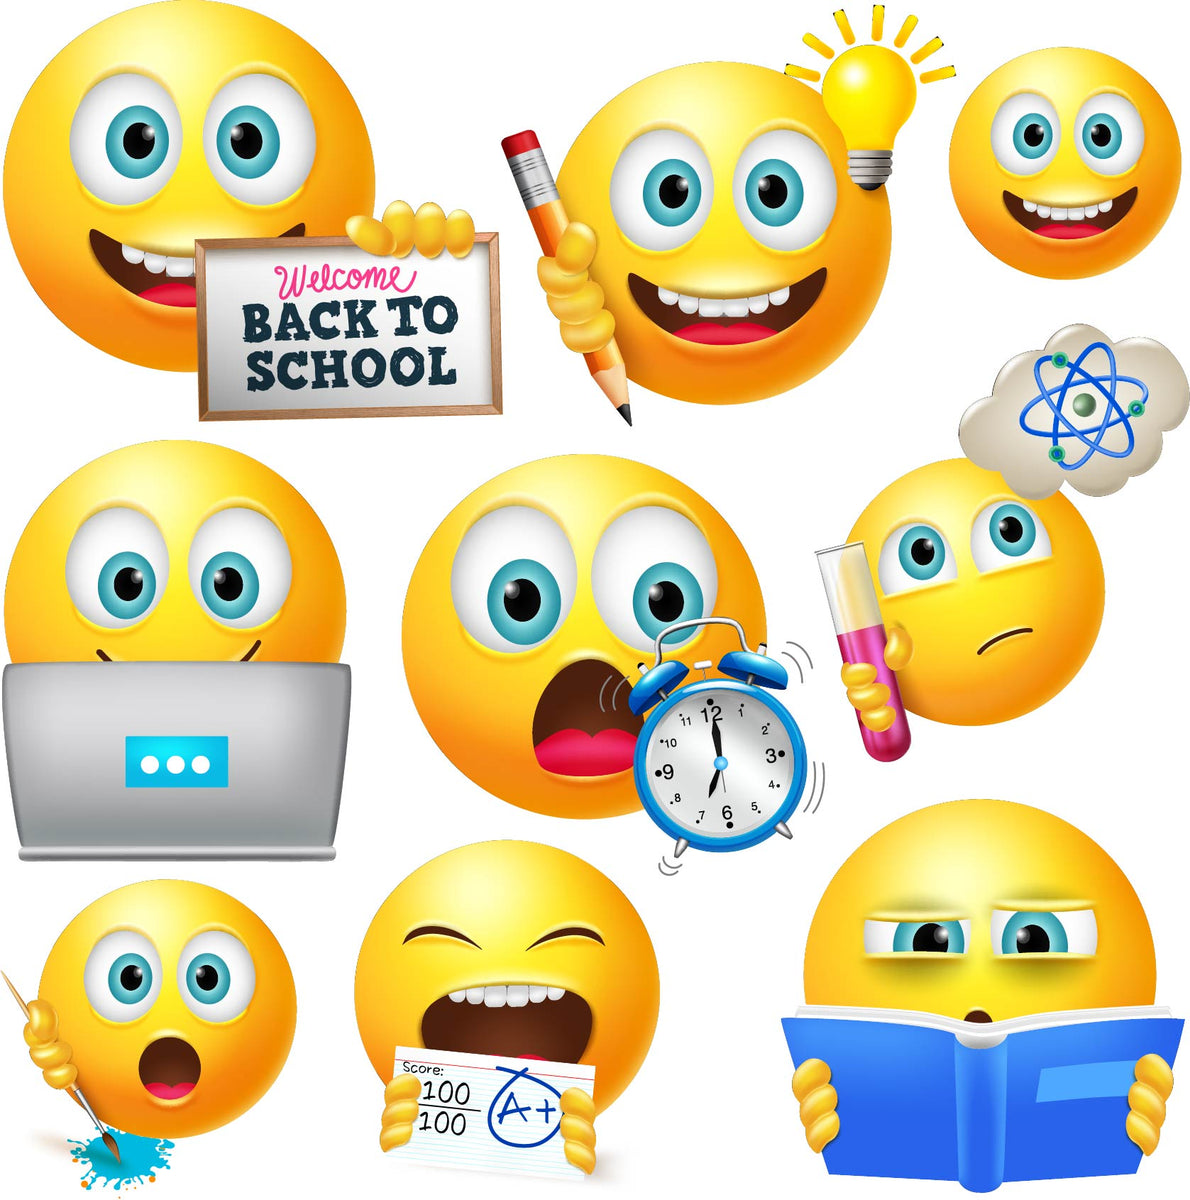 advice for school memes thumbs up emoji